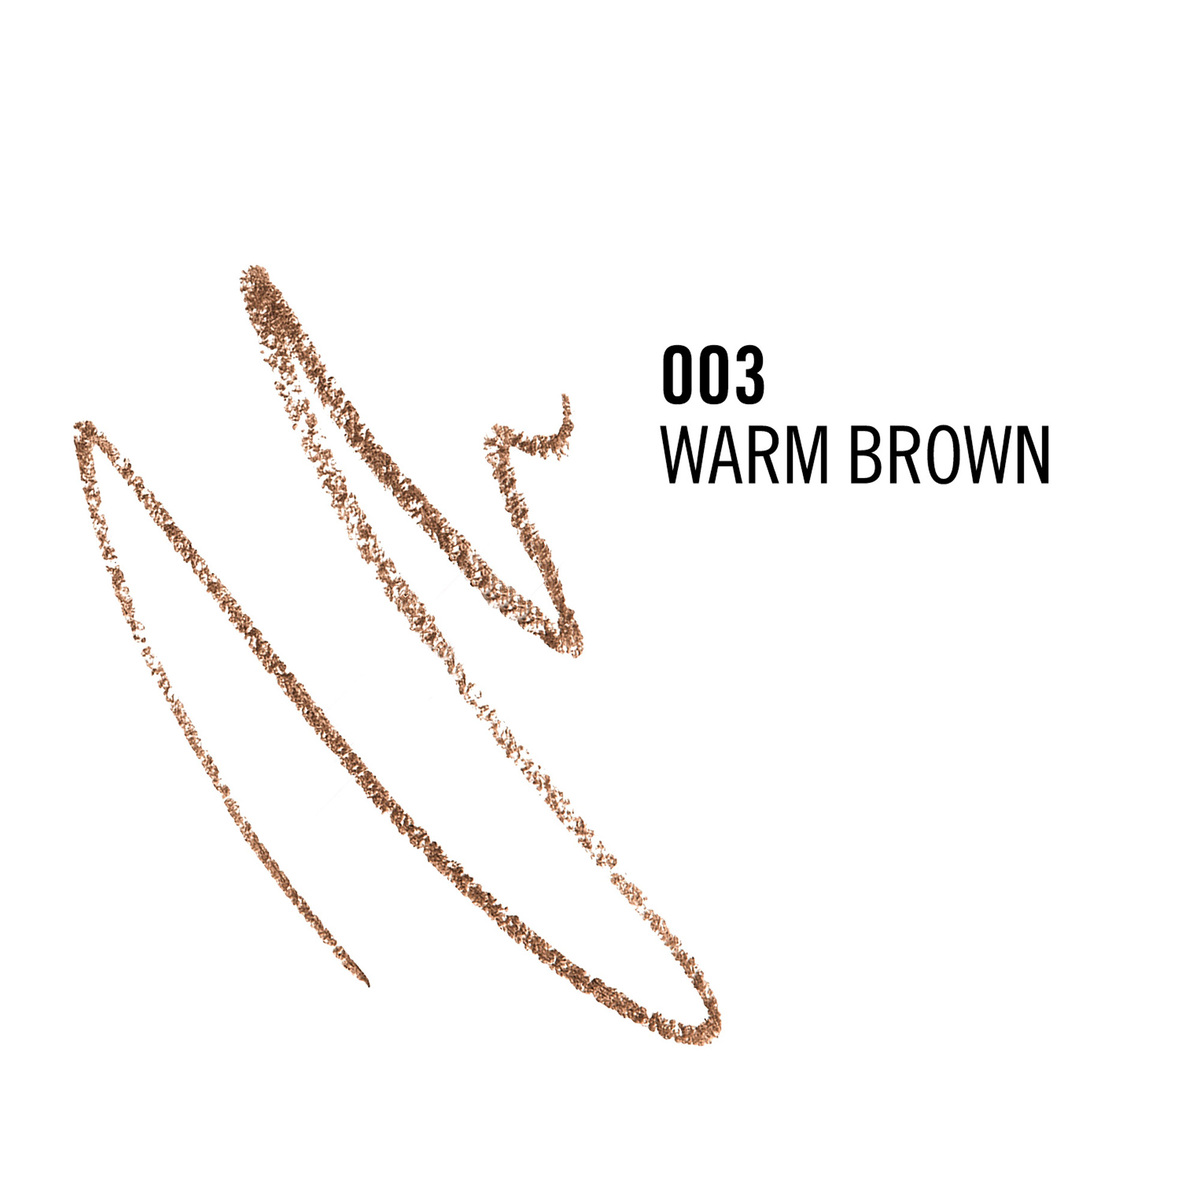 Rimmel London Kind & Free Brow Definer, 003 Warm Brown, 8 g